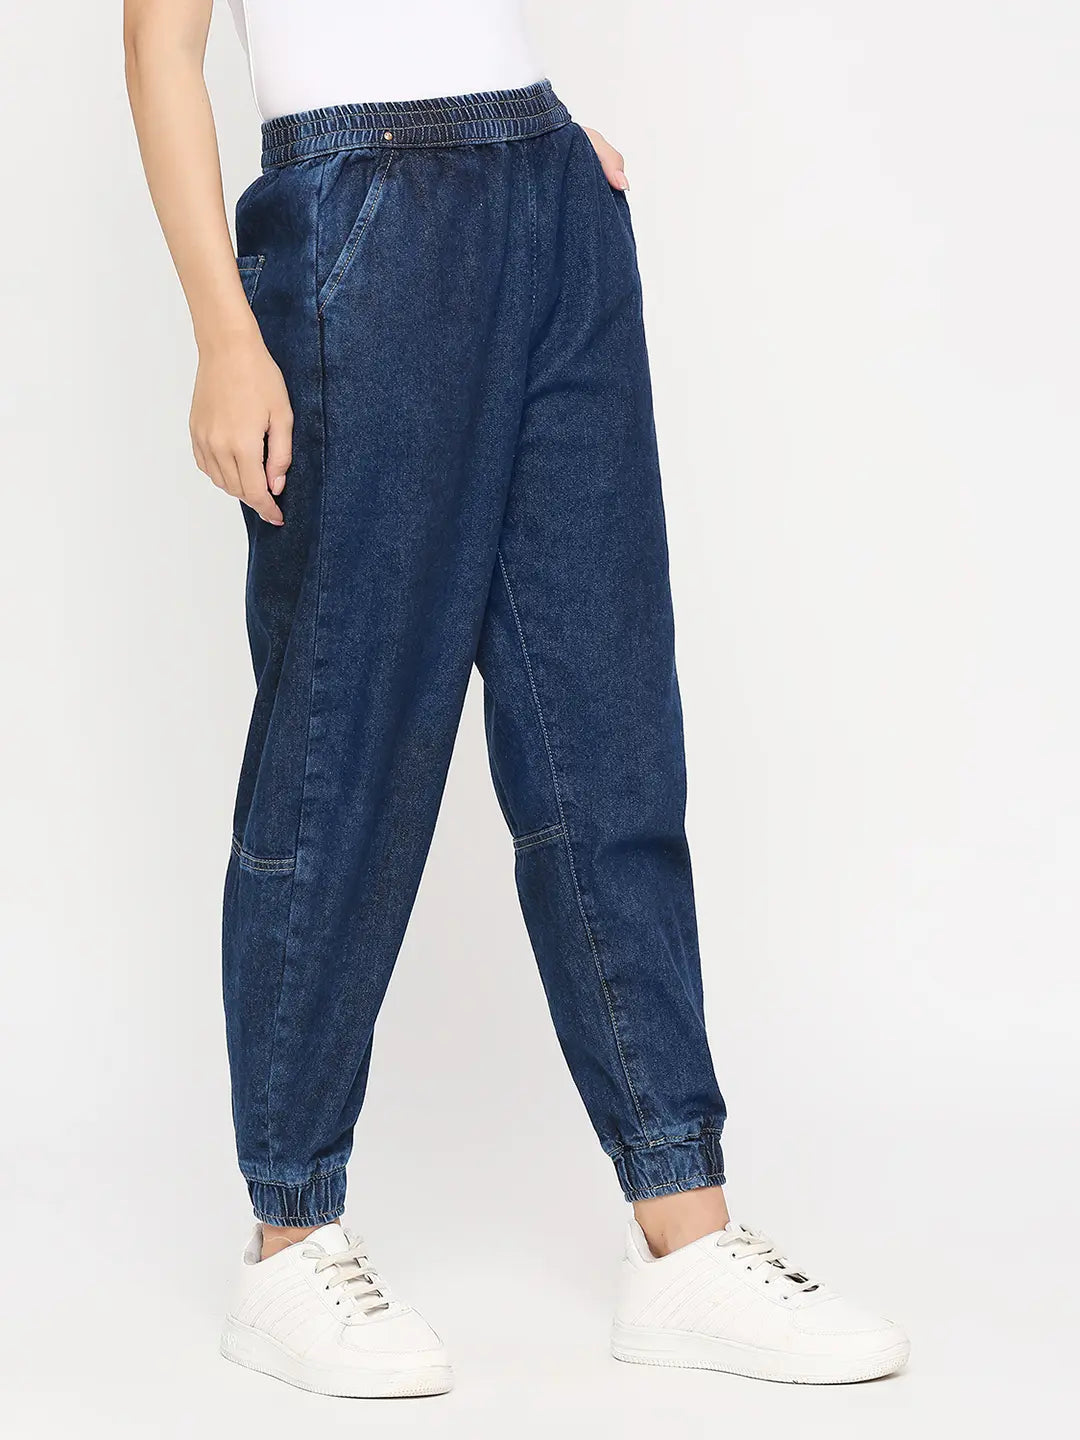 Grab Denim Jogger Jeans Ladies Size 6 Blue Elastic Waist Pockets Casual  Comfort | eBay